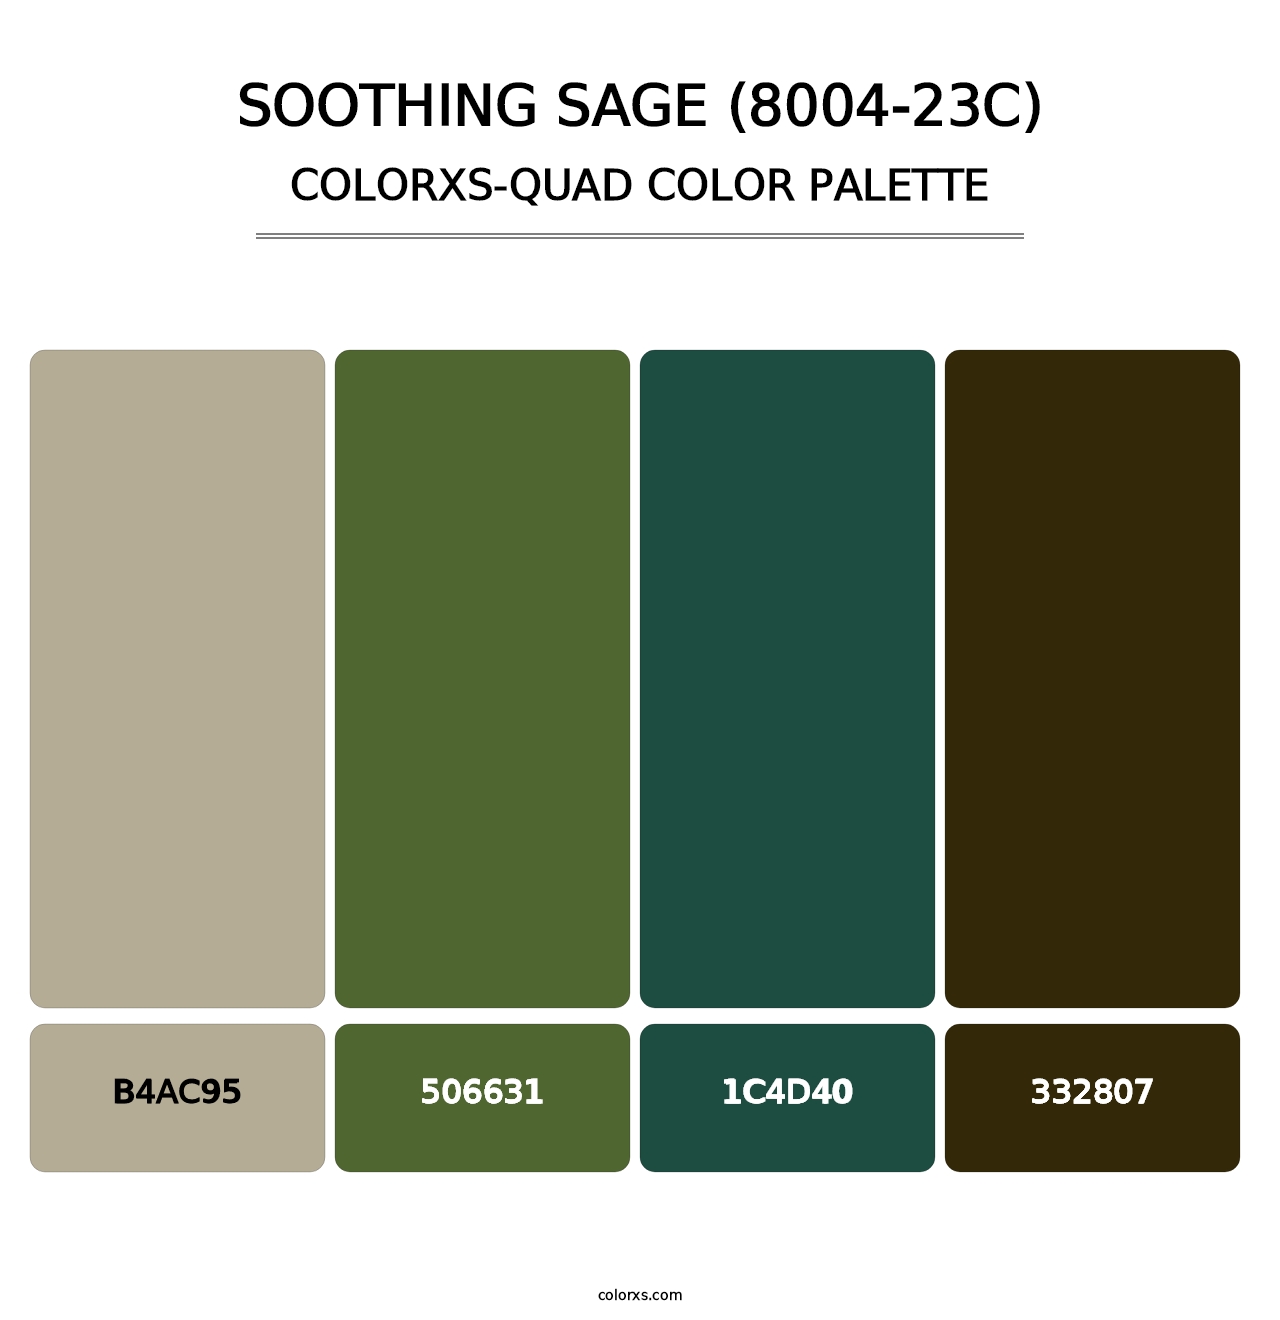 Soothing Sage (8004-23C) - Colorxs Quad Palette